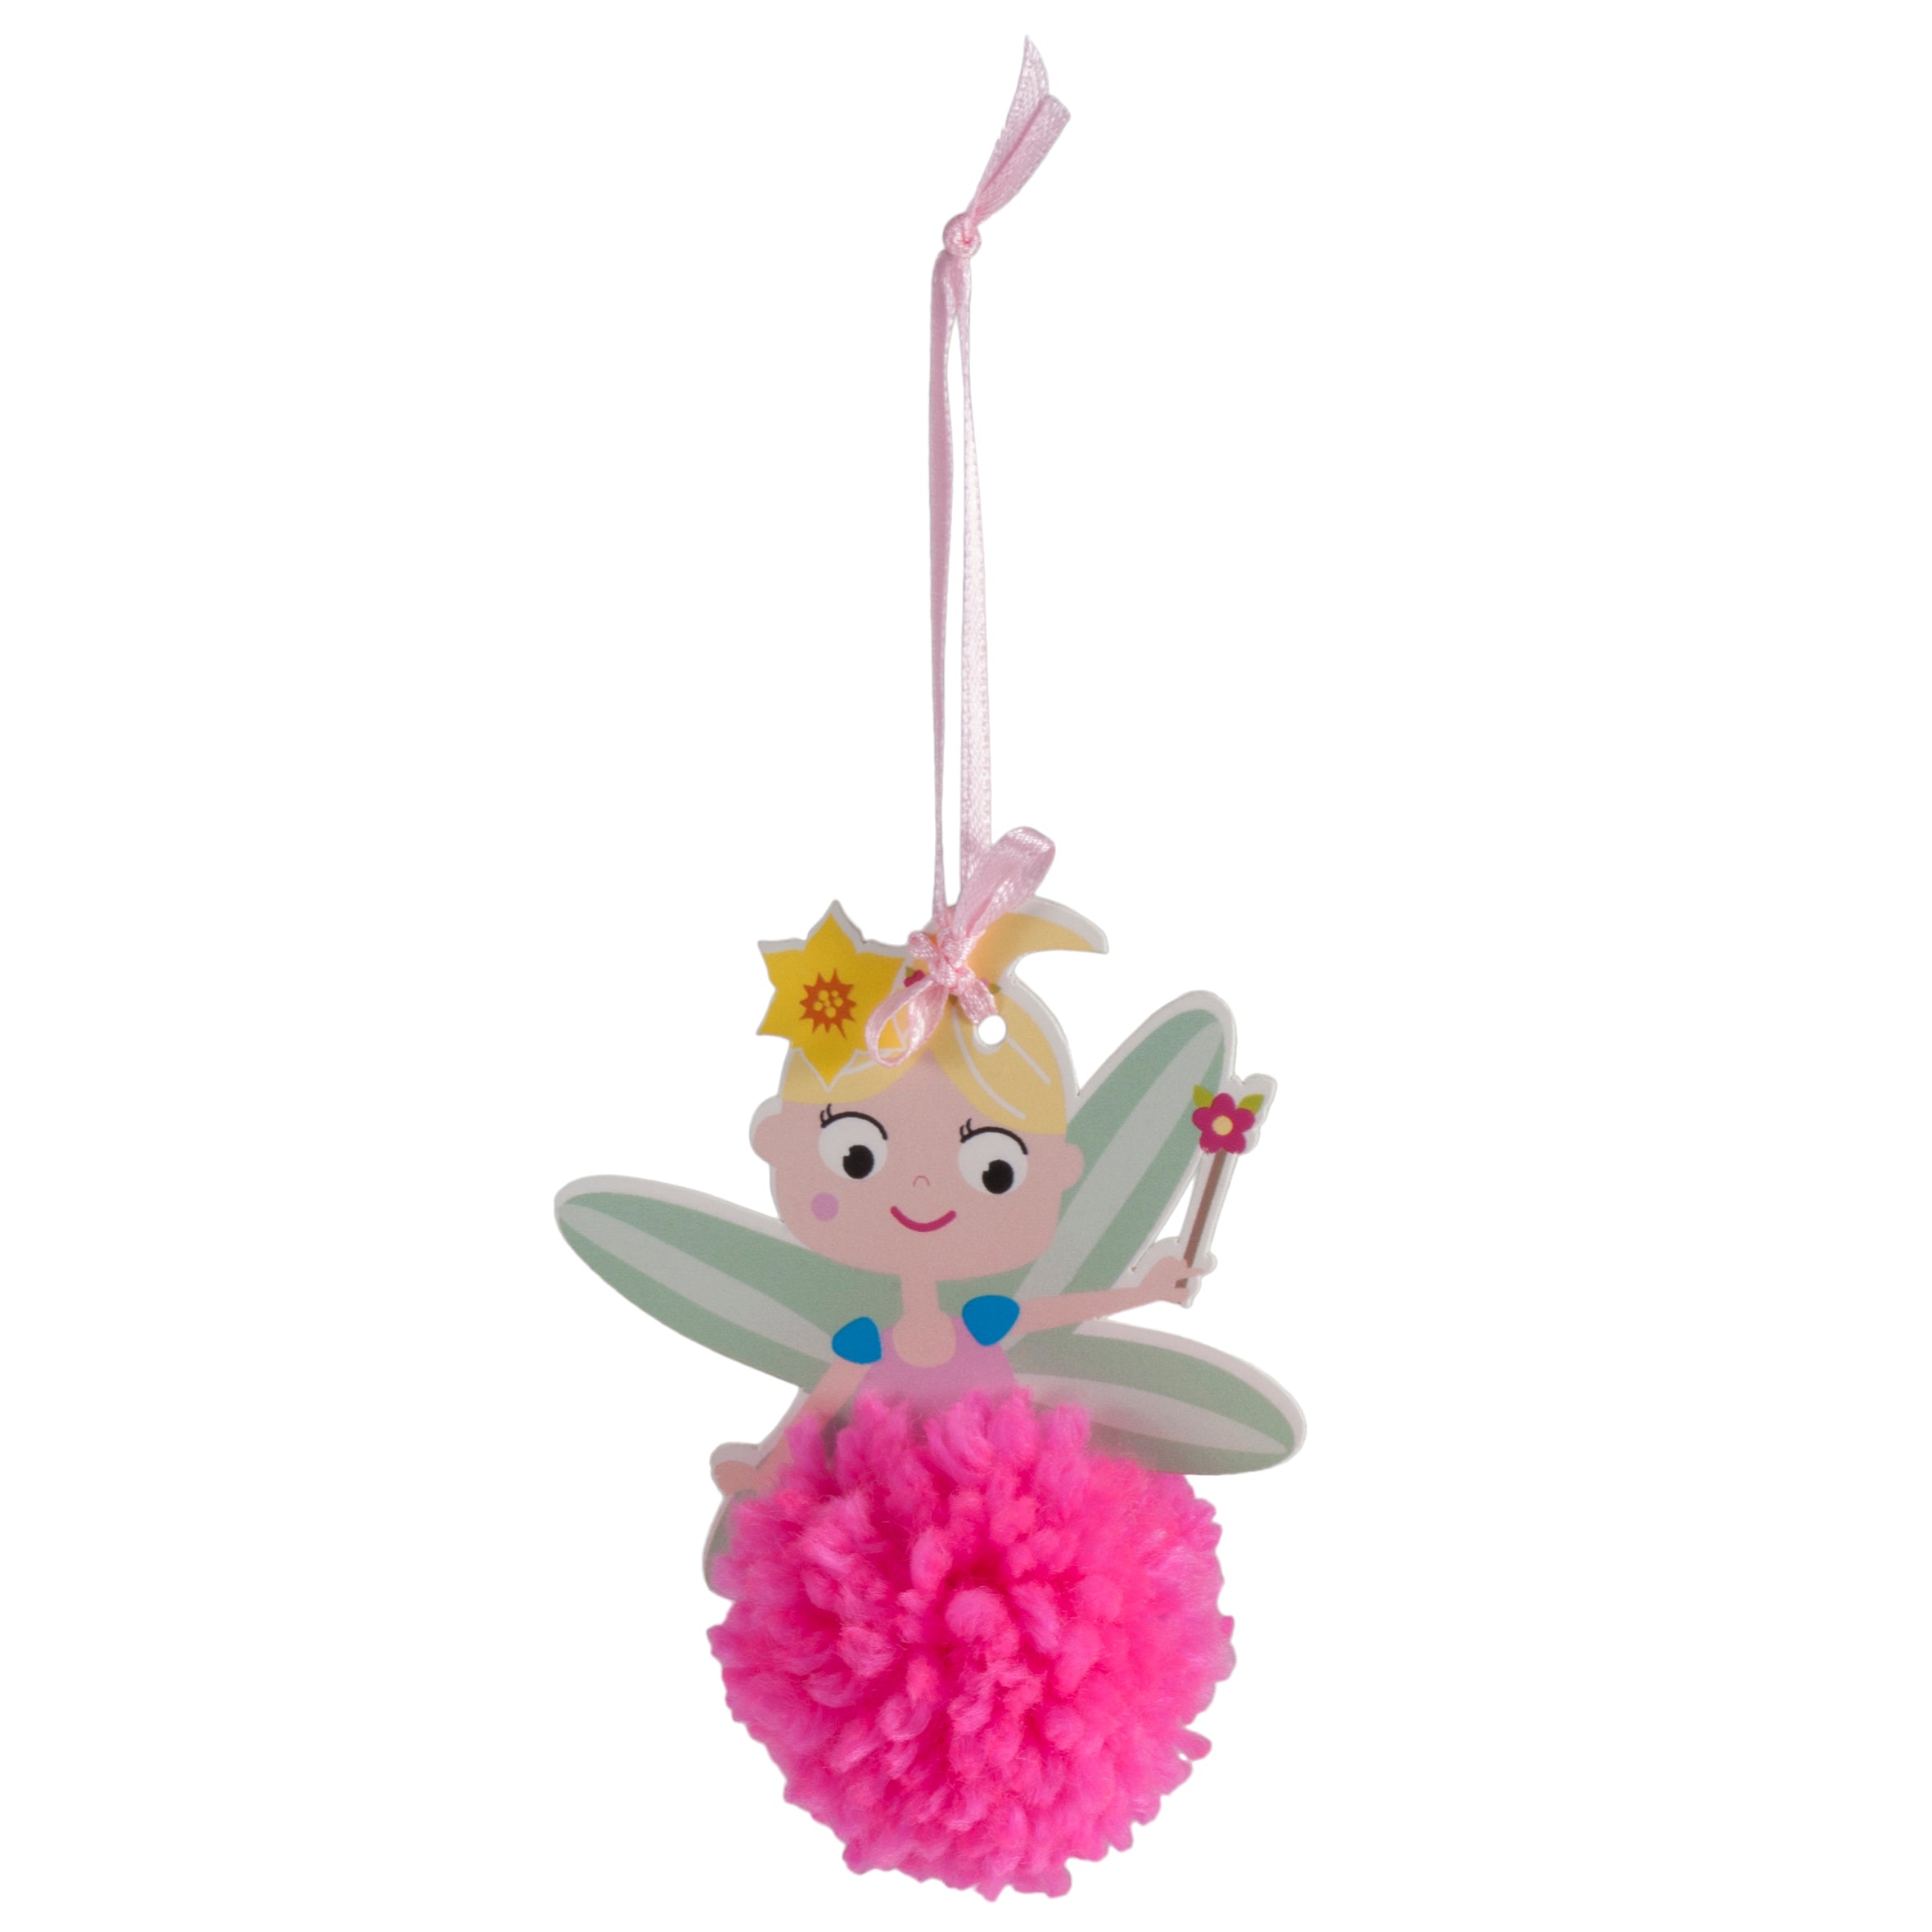 Pompom Decoration Kit - Fairy